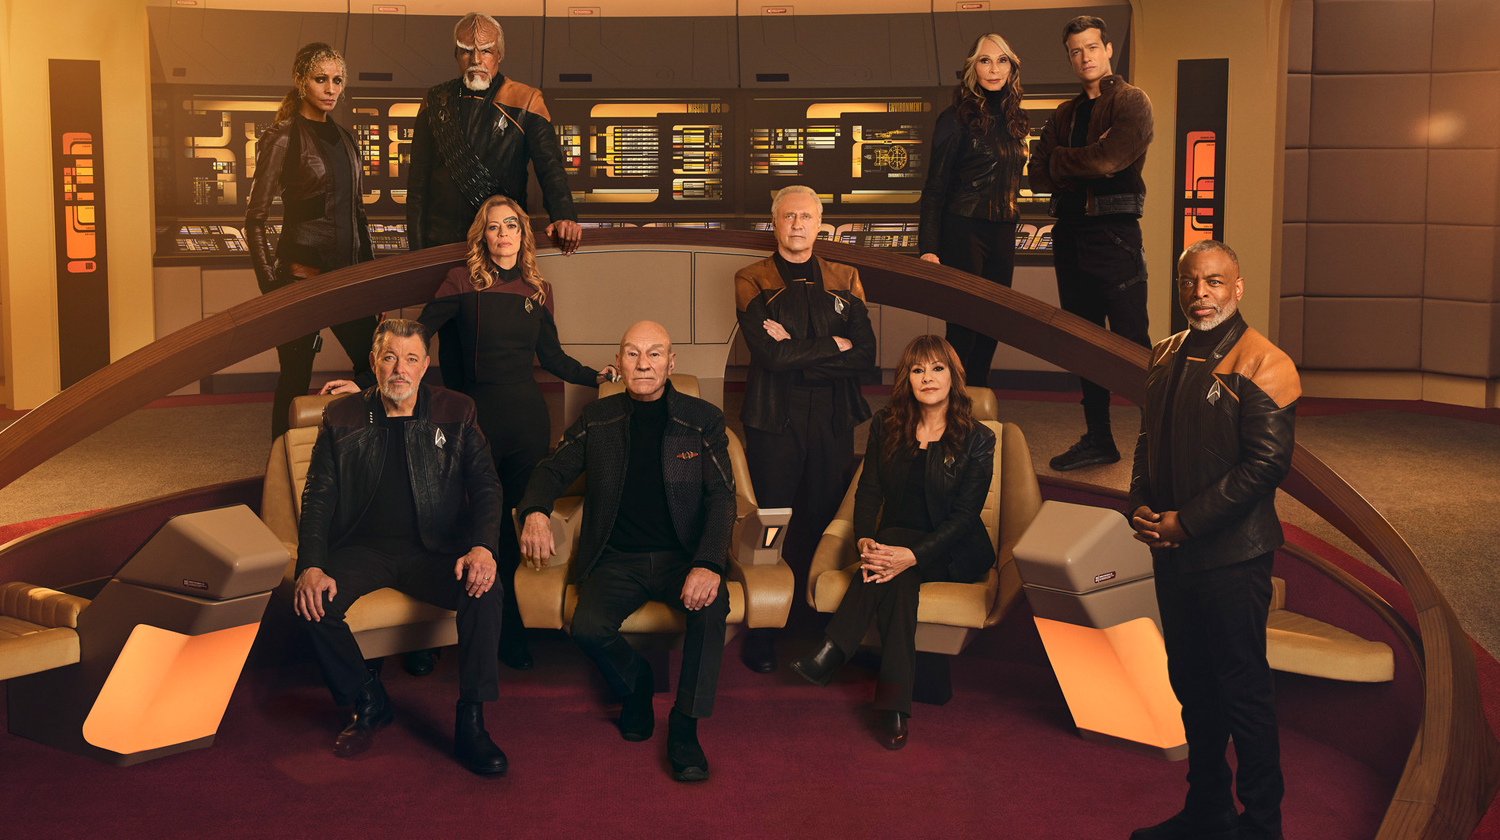 Star Trek: Picard: Season 3